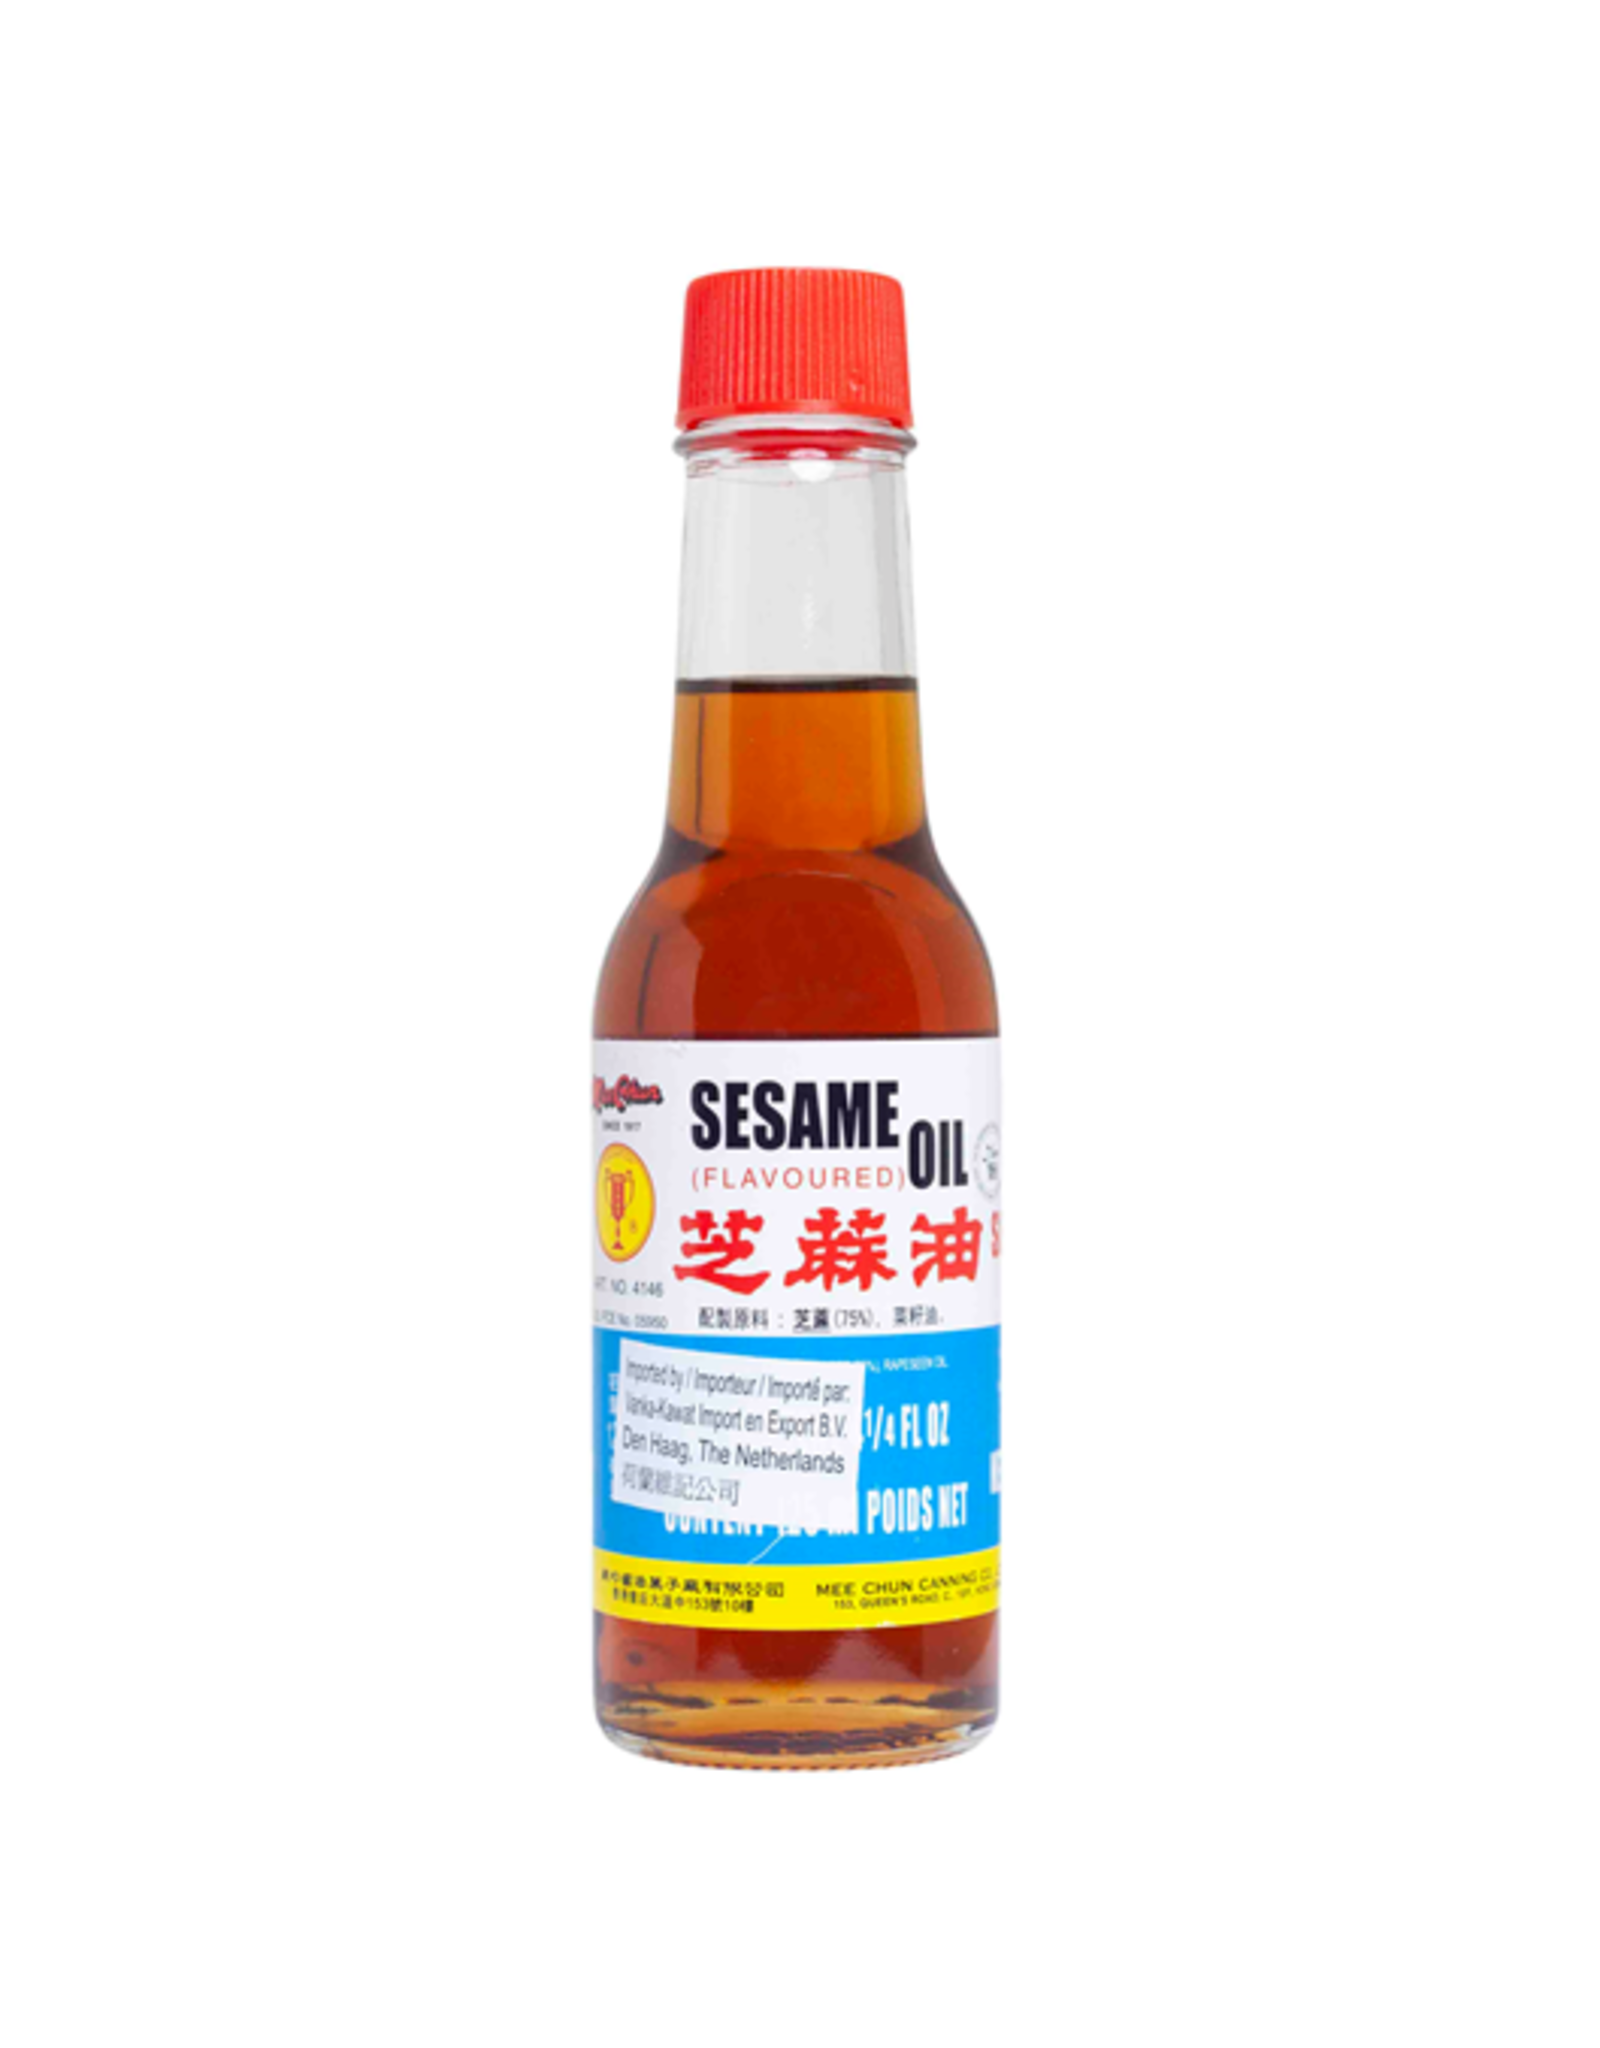 Mee Chun Brand Sesam Oil Flavoured